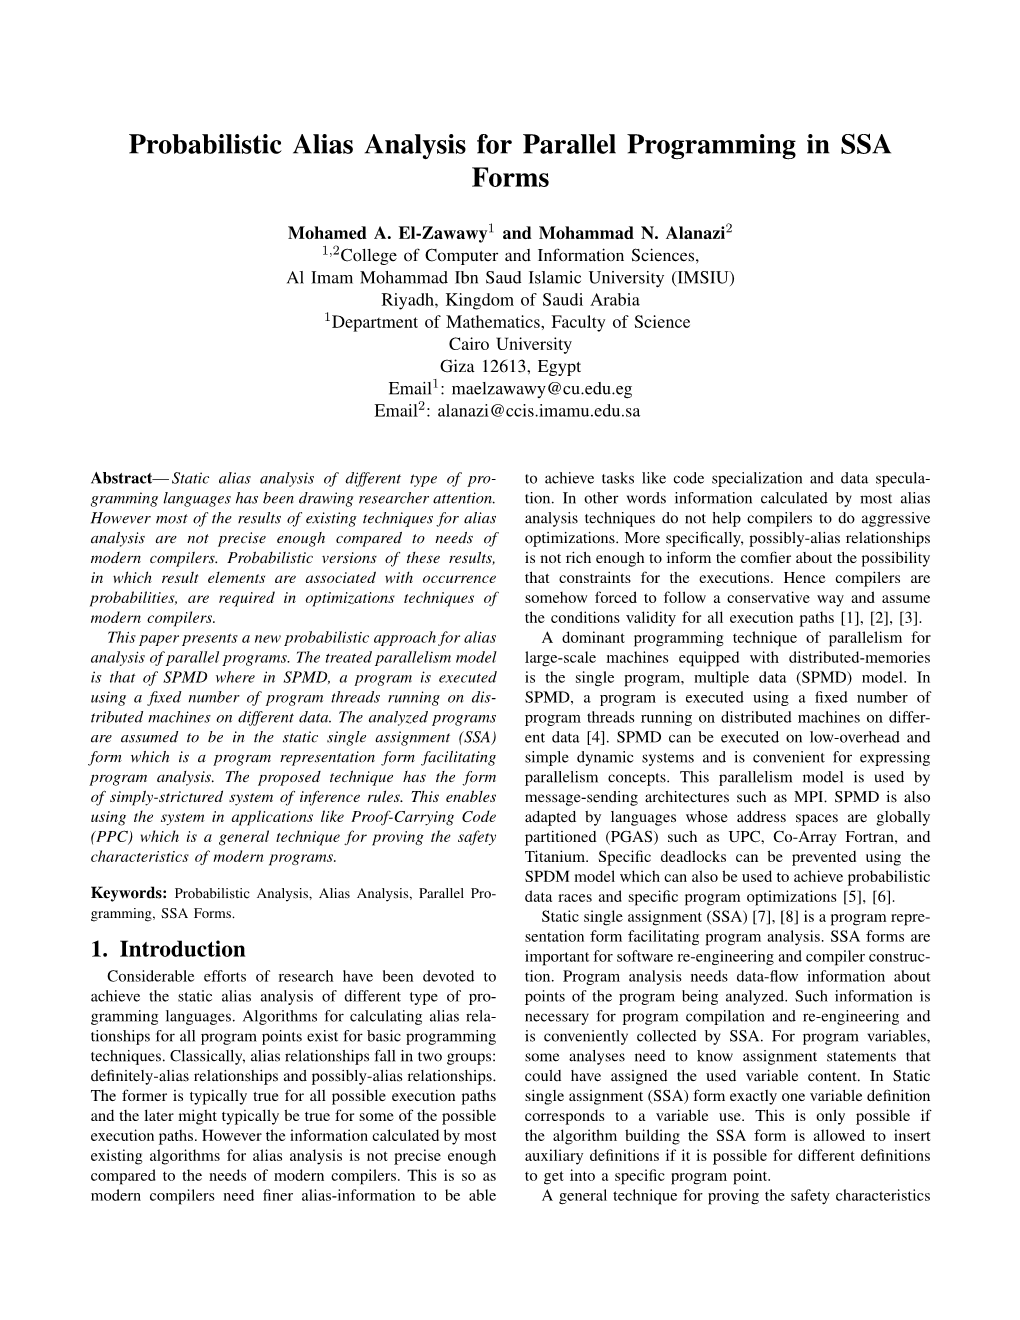 Probabilistic Alias Analysis for Parallel Programming in SSA Forms.Pdf